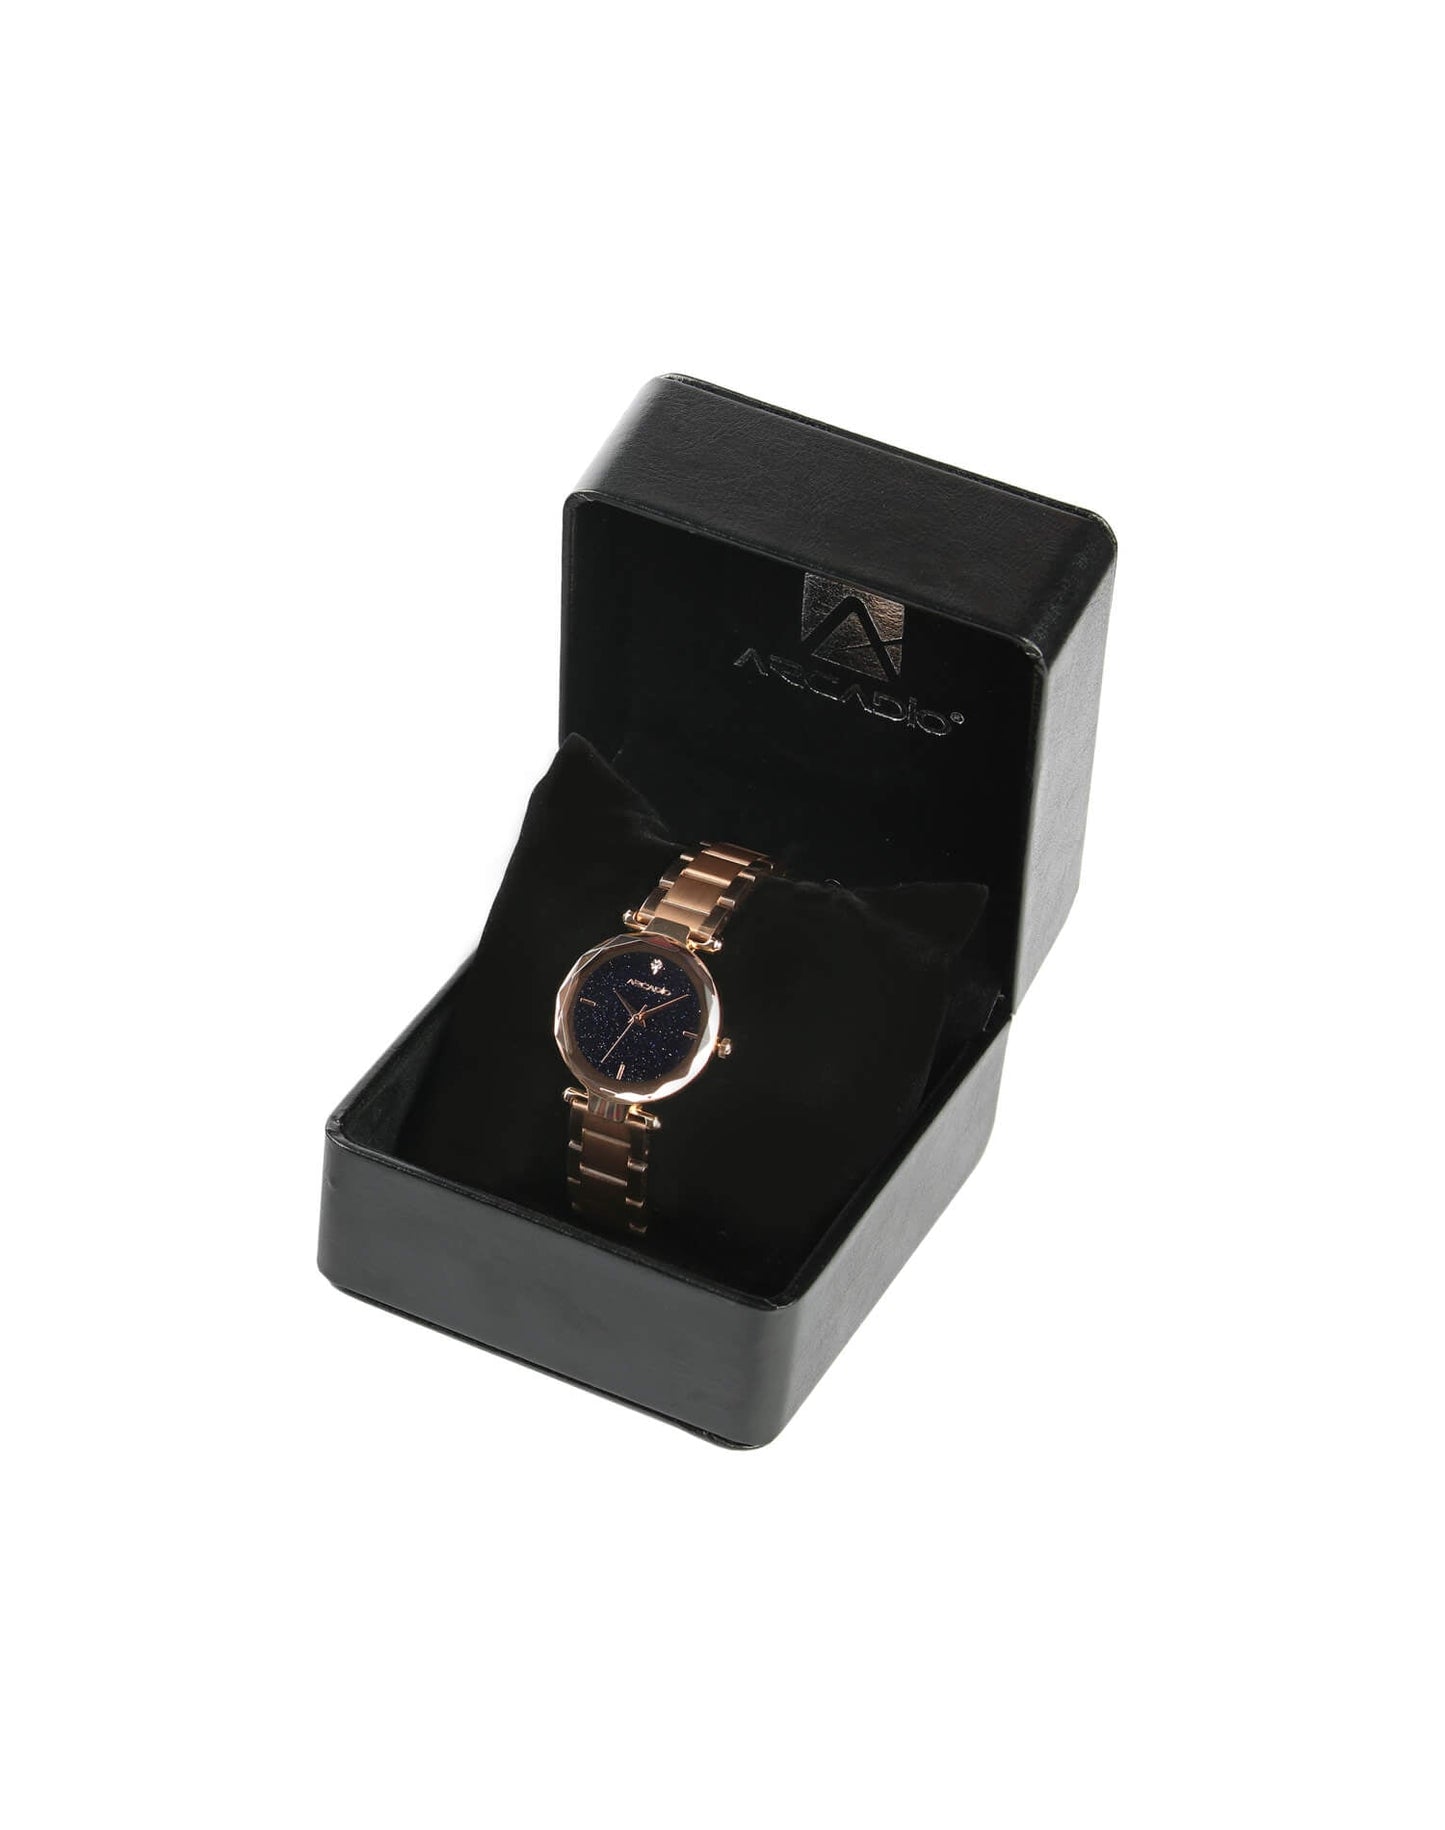 STARGAZE Bracelet Watch - Ravishing Rose Gold - ARSG1001RG ARCADIO